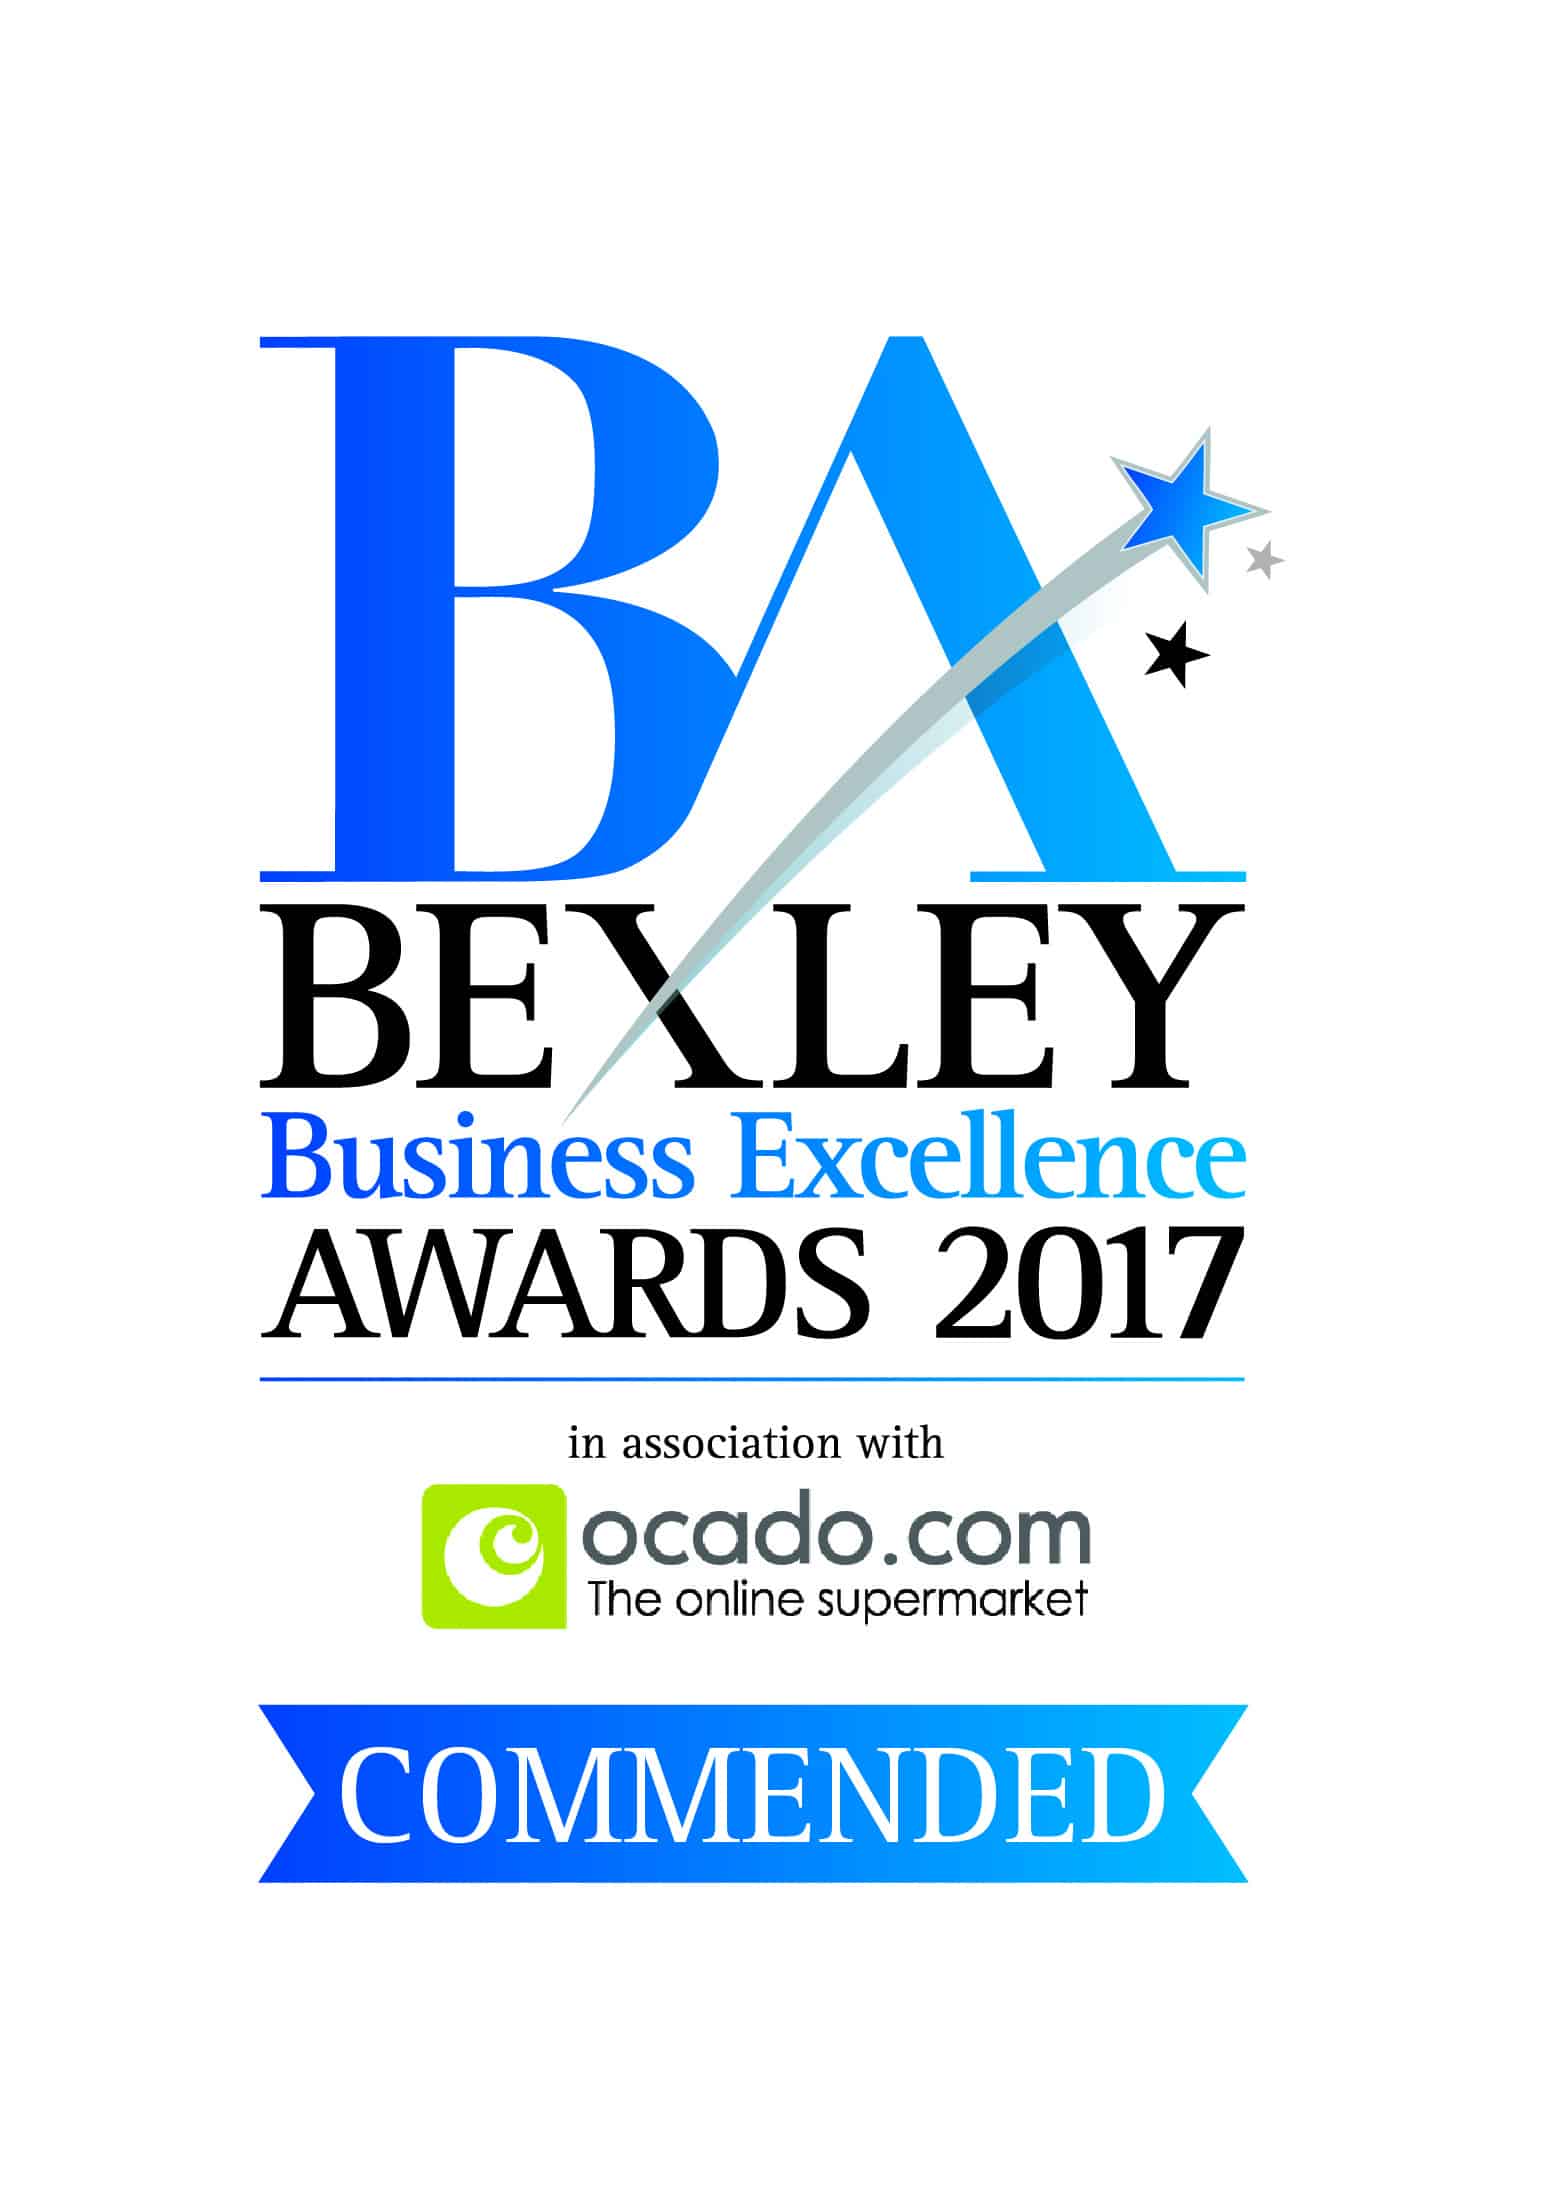 Google 2017 Logo - Bexley Awards 2017 Logo Commended babyballet